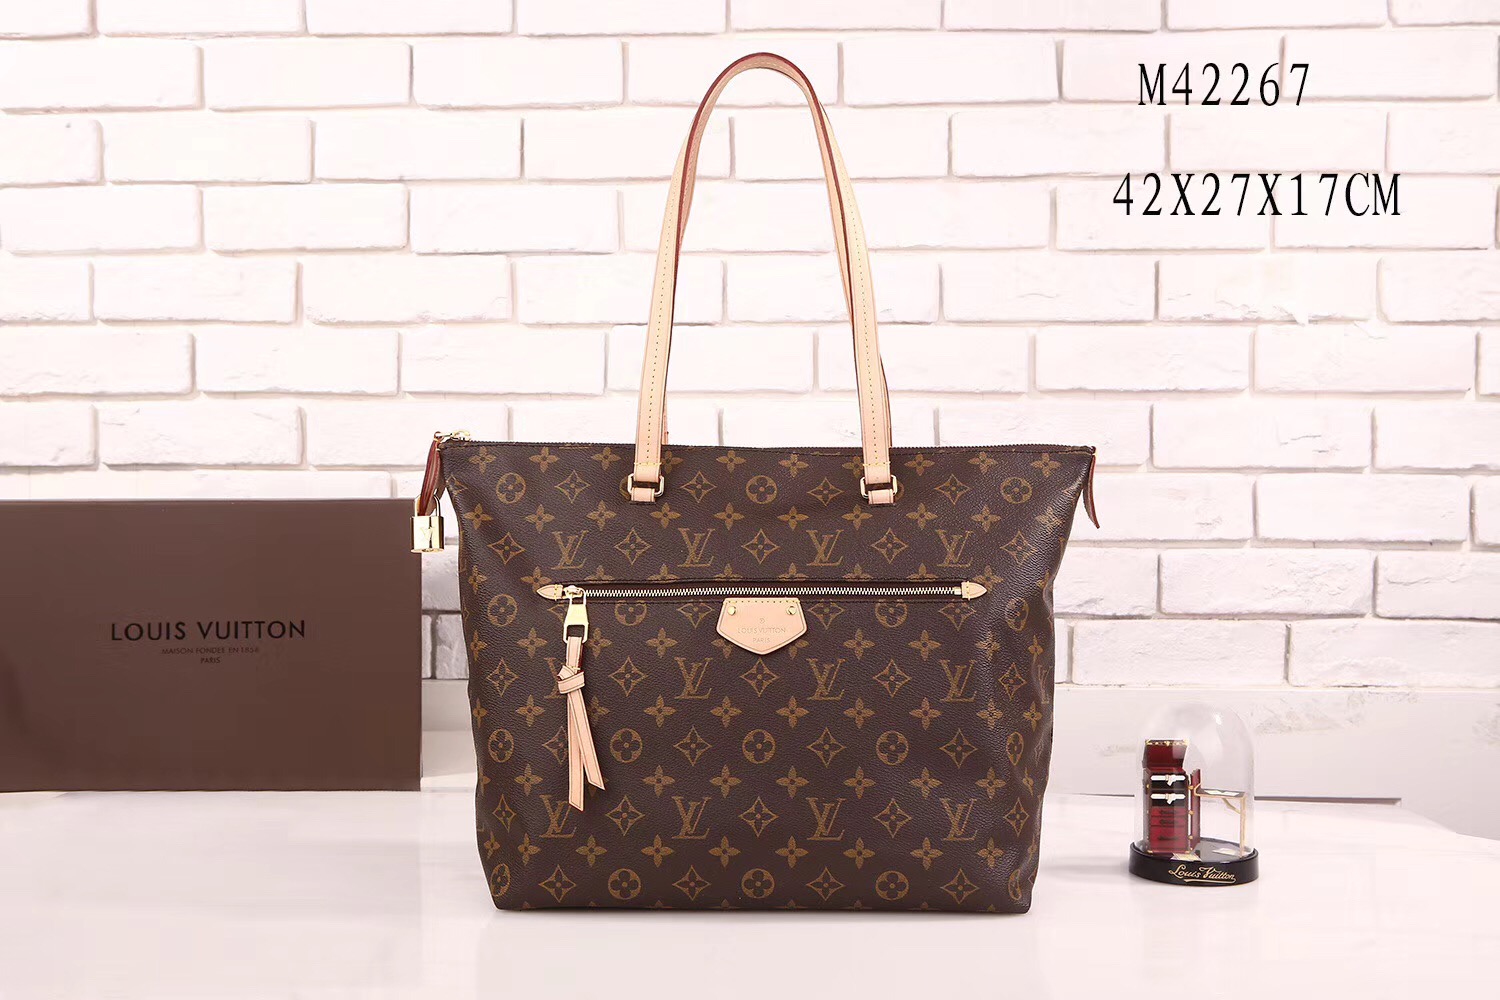 LV Louis Vuitton Iena Monogram bags M42267 Handbags Brown [LV1154] - $259.00 : Luxury Shop